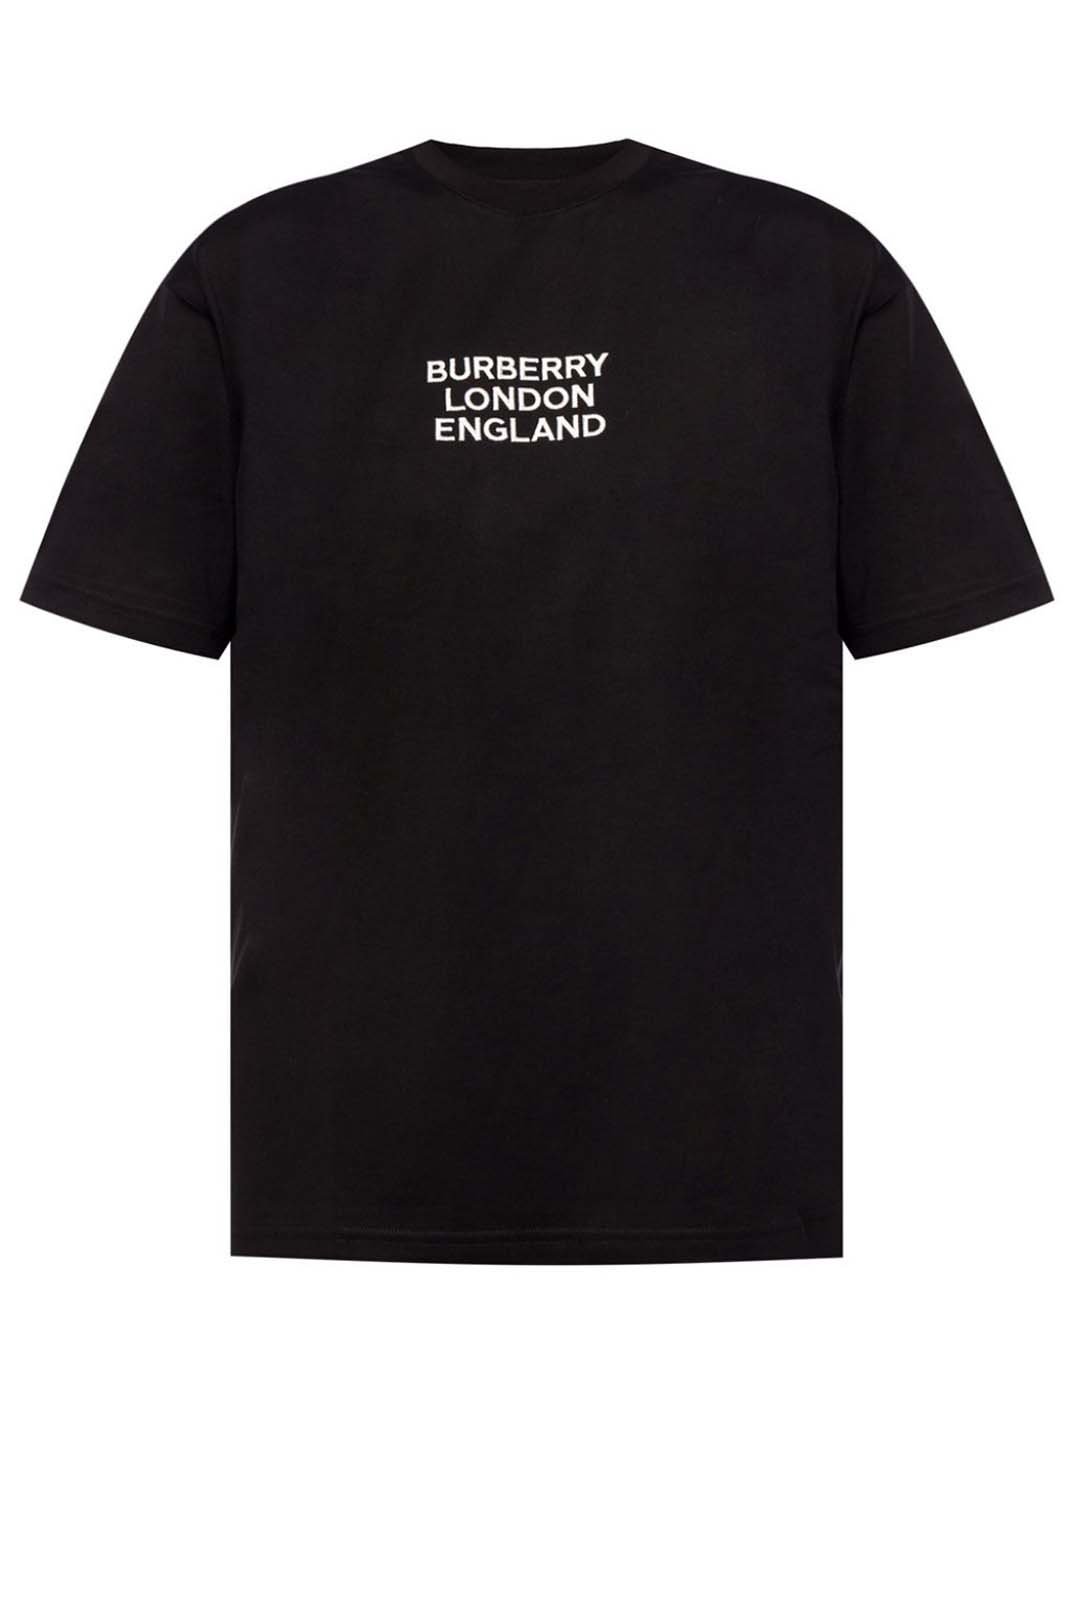 Tee shirt  Burberry 8021175 BLACK